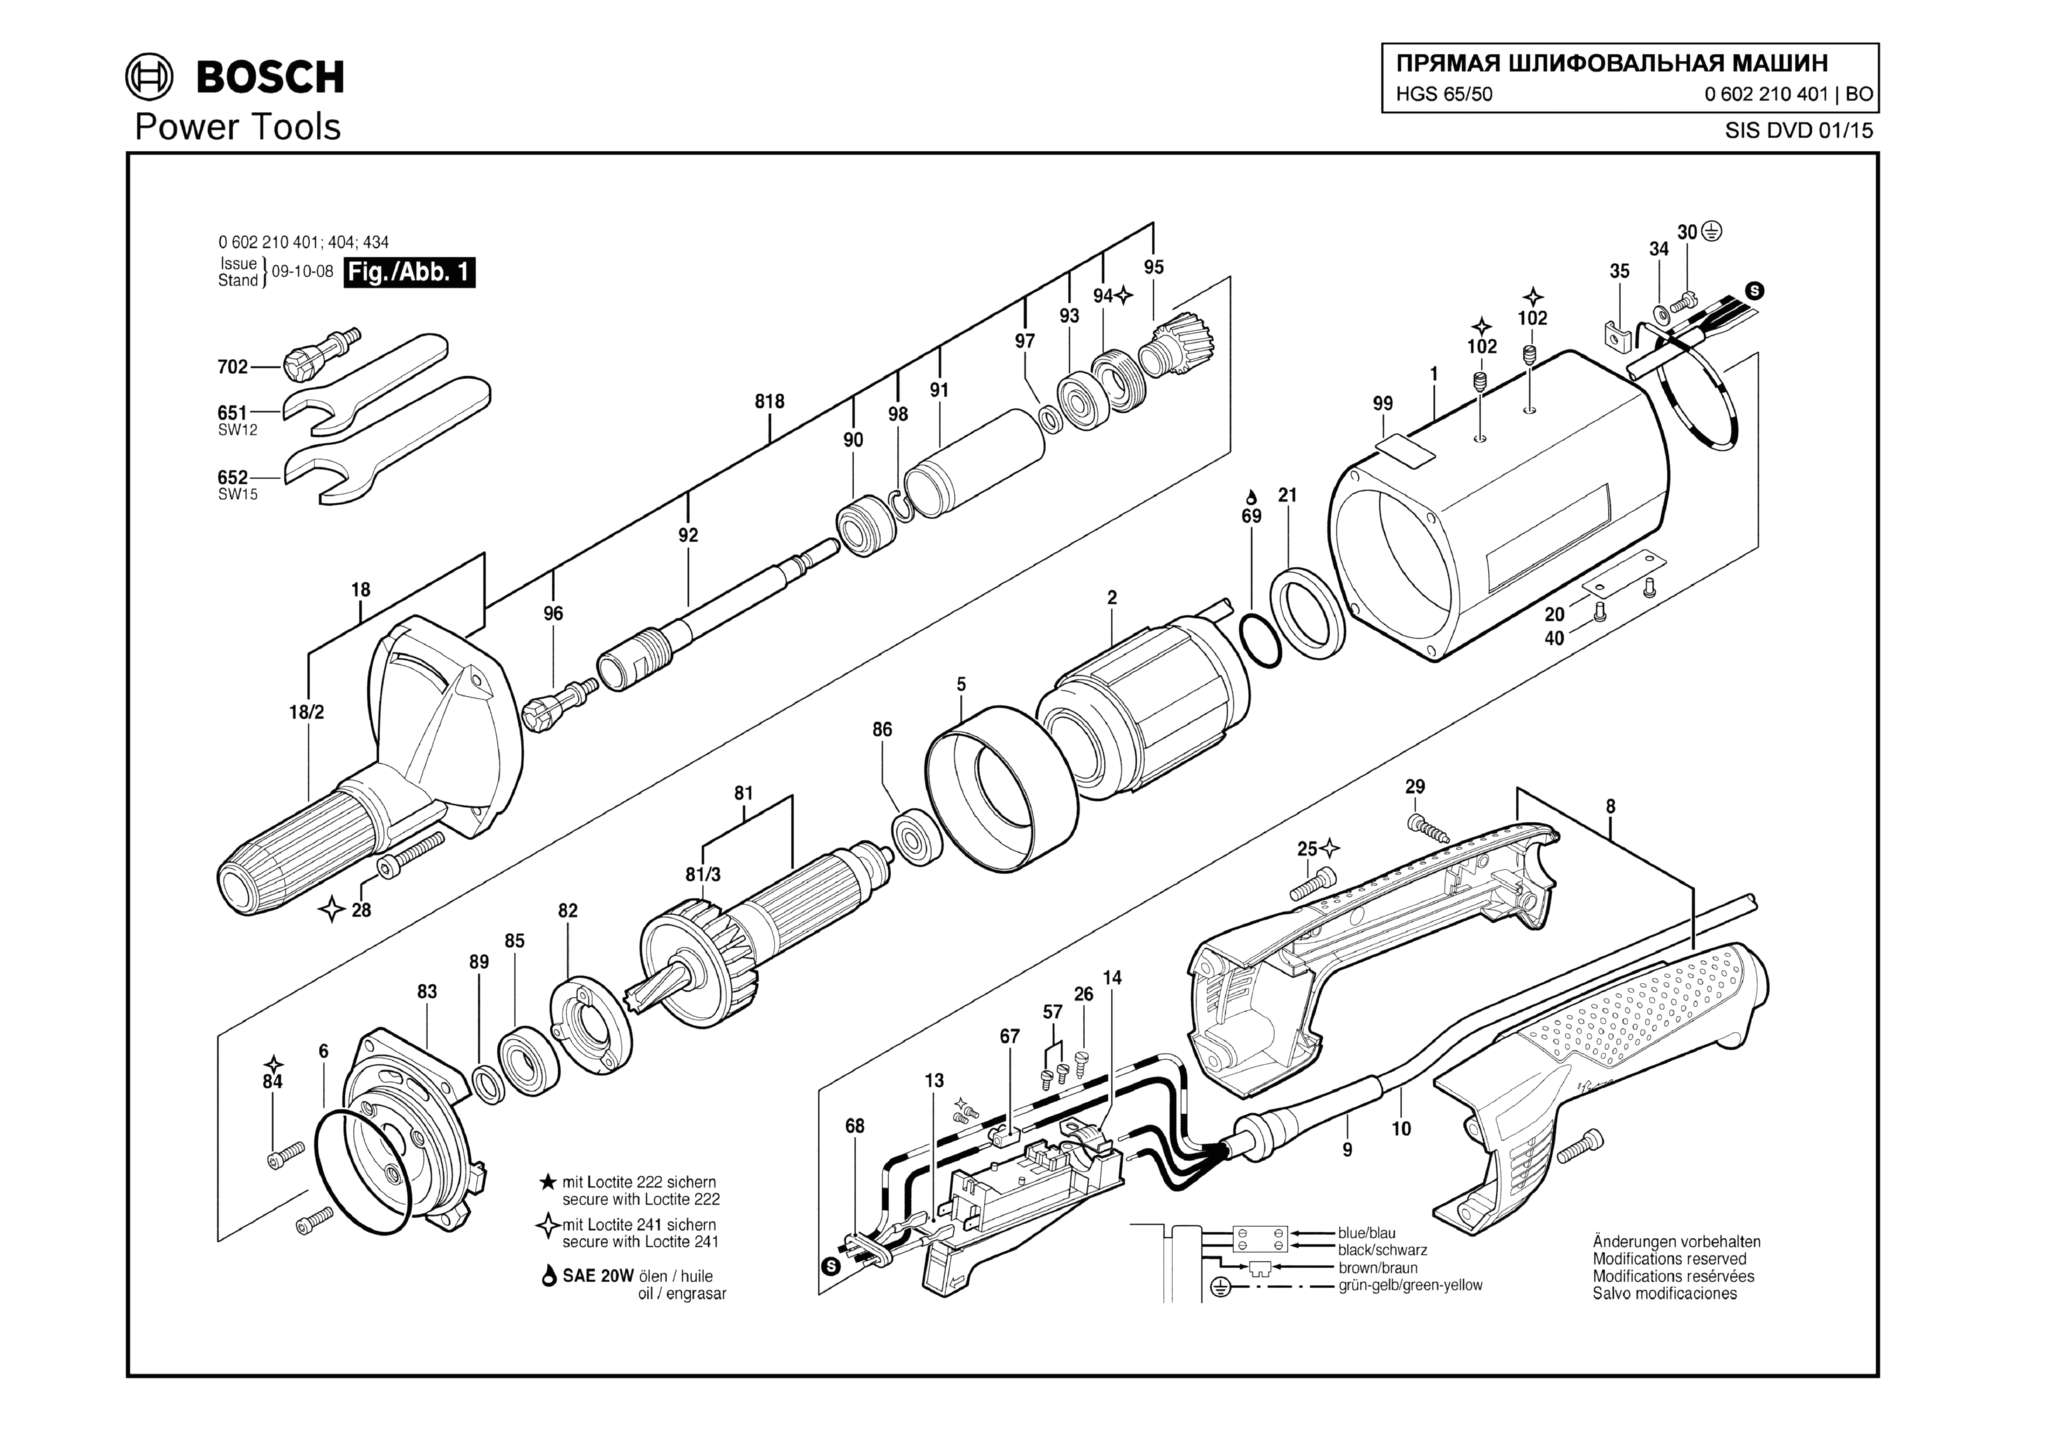 Запчасти, схема и деталировка Bosch HGS 65/50 (ТИП 0602210401)